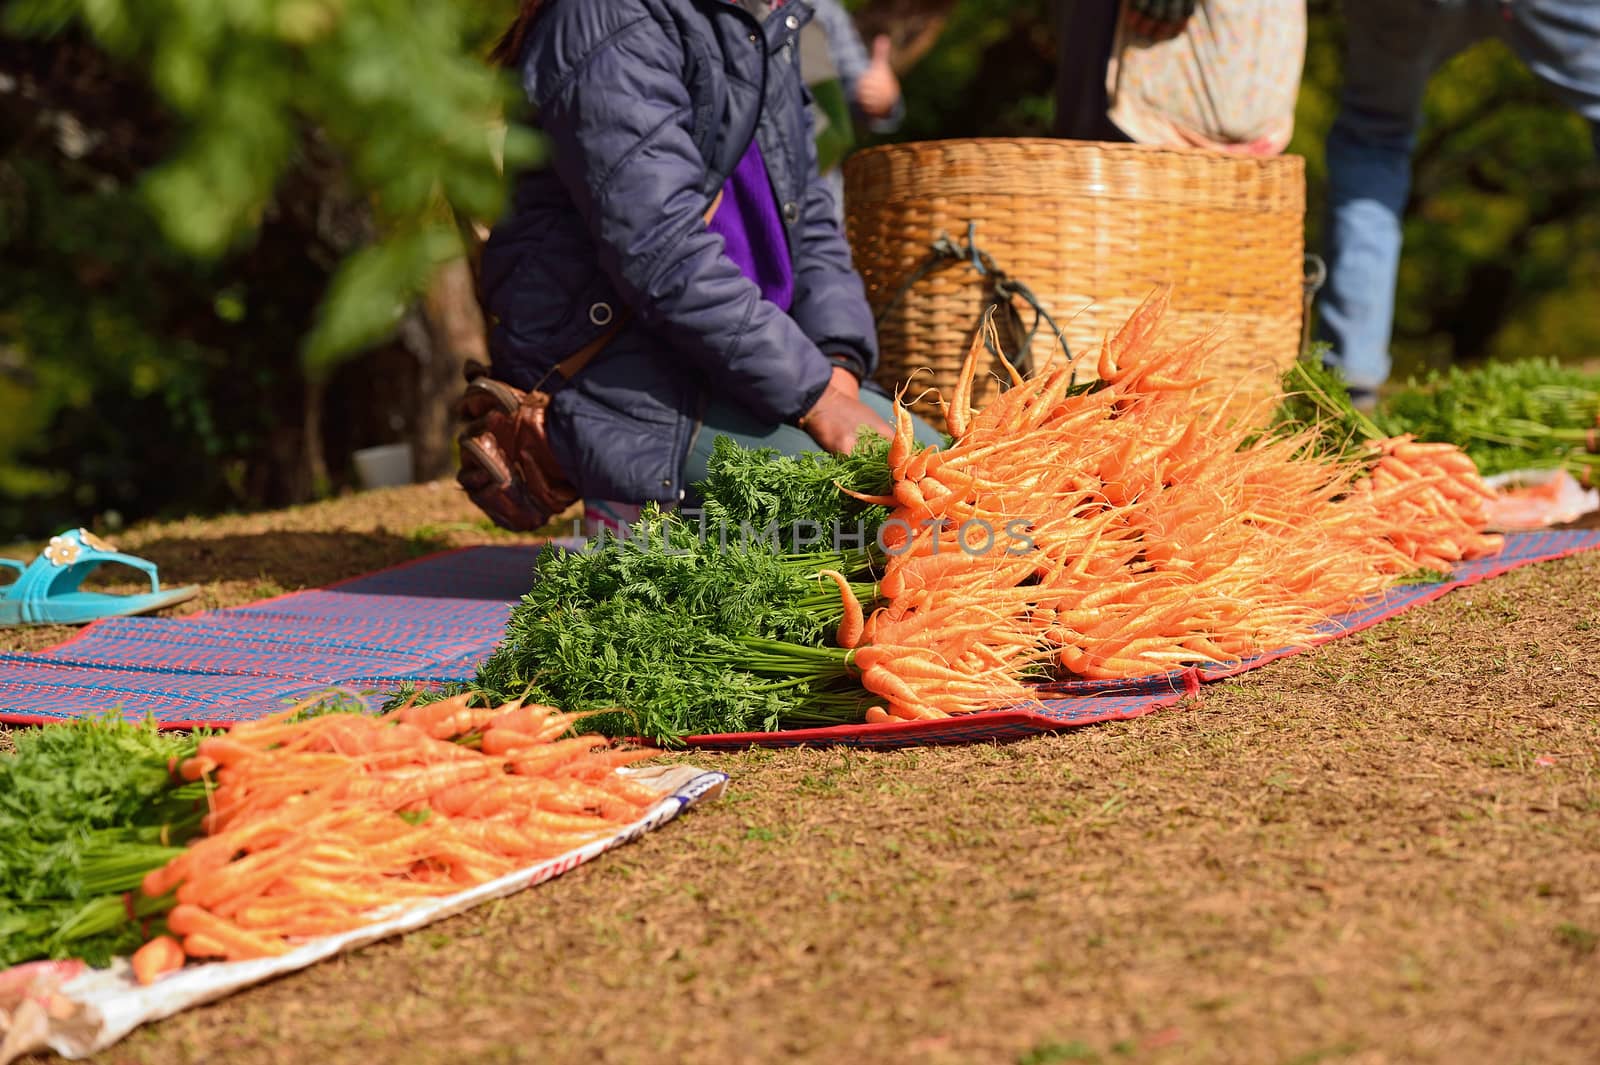 fresh carrots at Doi Angkhang royal project, Chiangmai, Thailand by think4photop